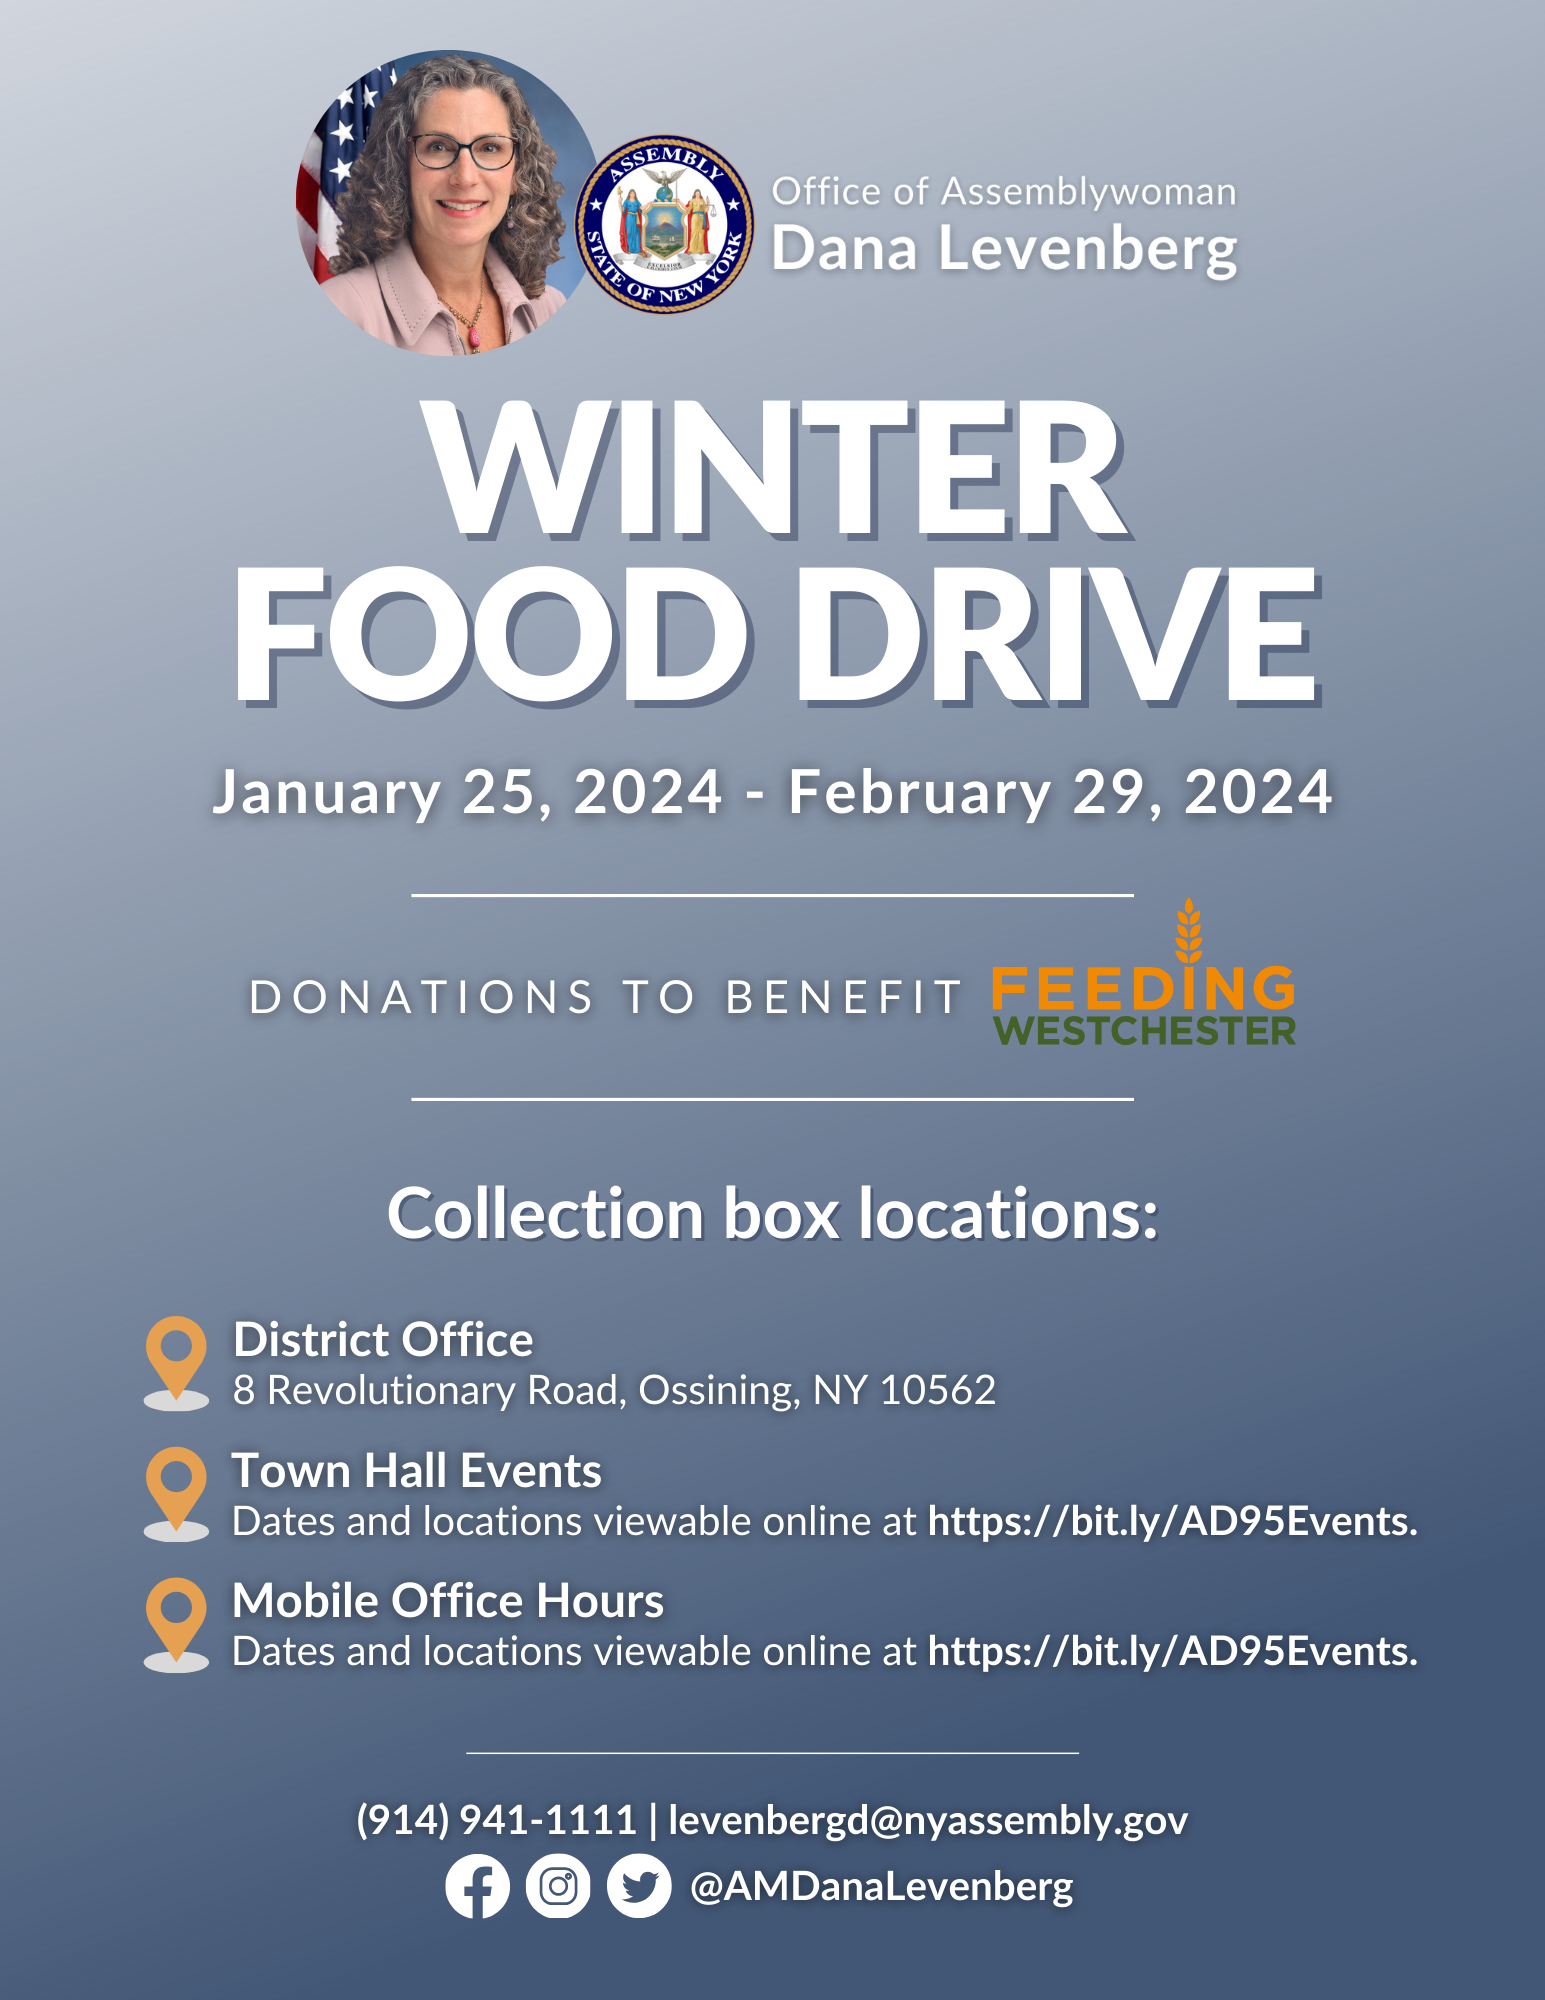 Winter Food Drive - January 25, 2024 - February 29, 2024